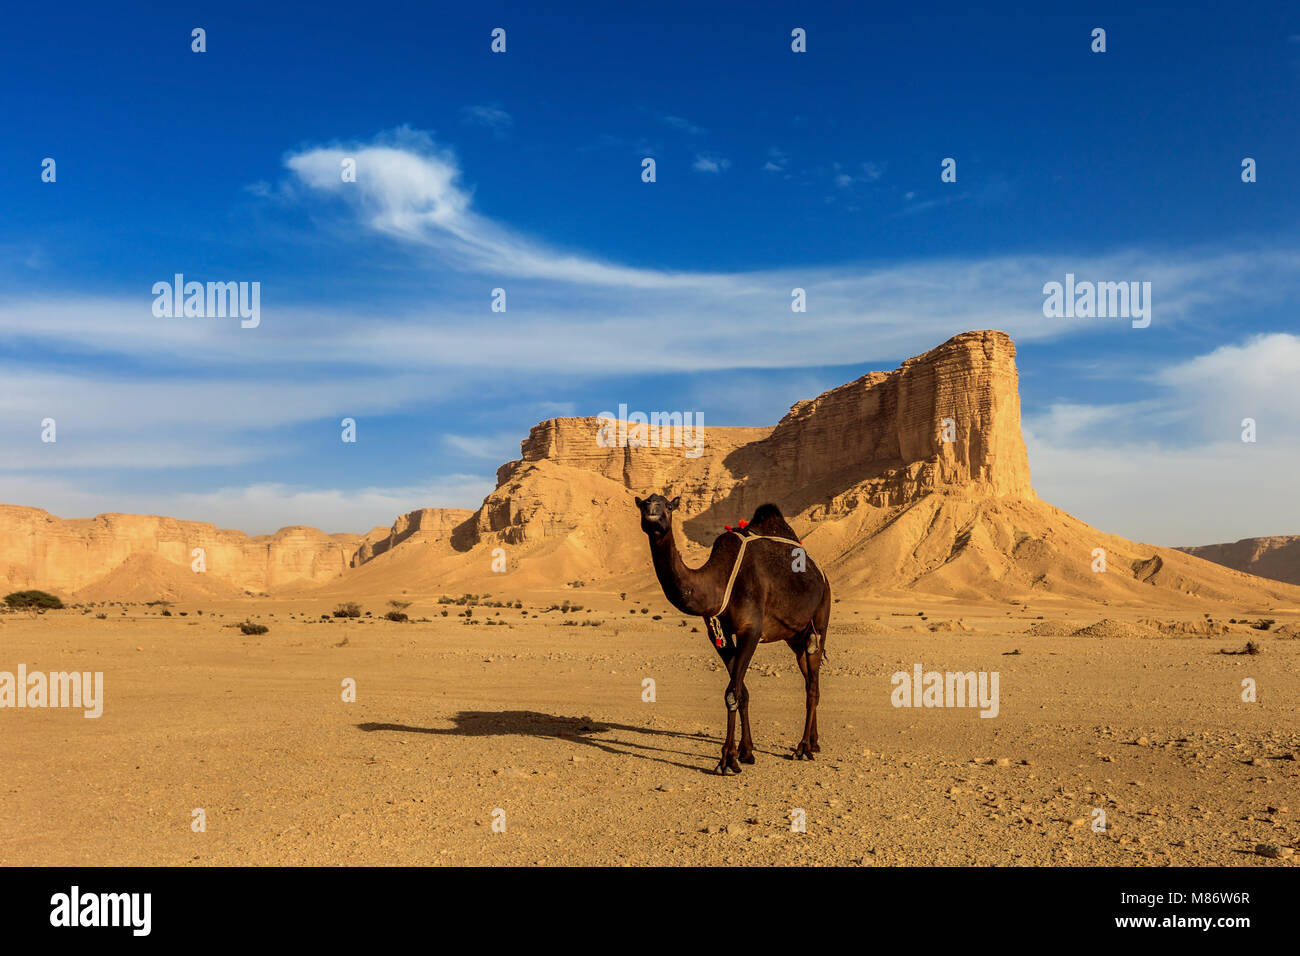 Camel in the desert, Riyadh, Saudi Arabia Stock Photo